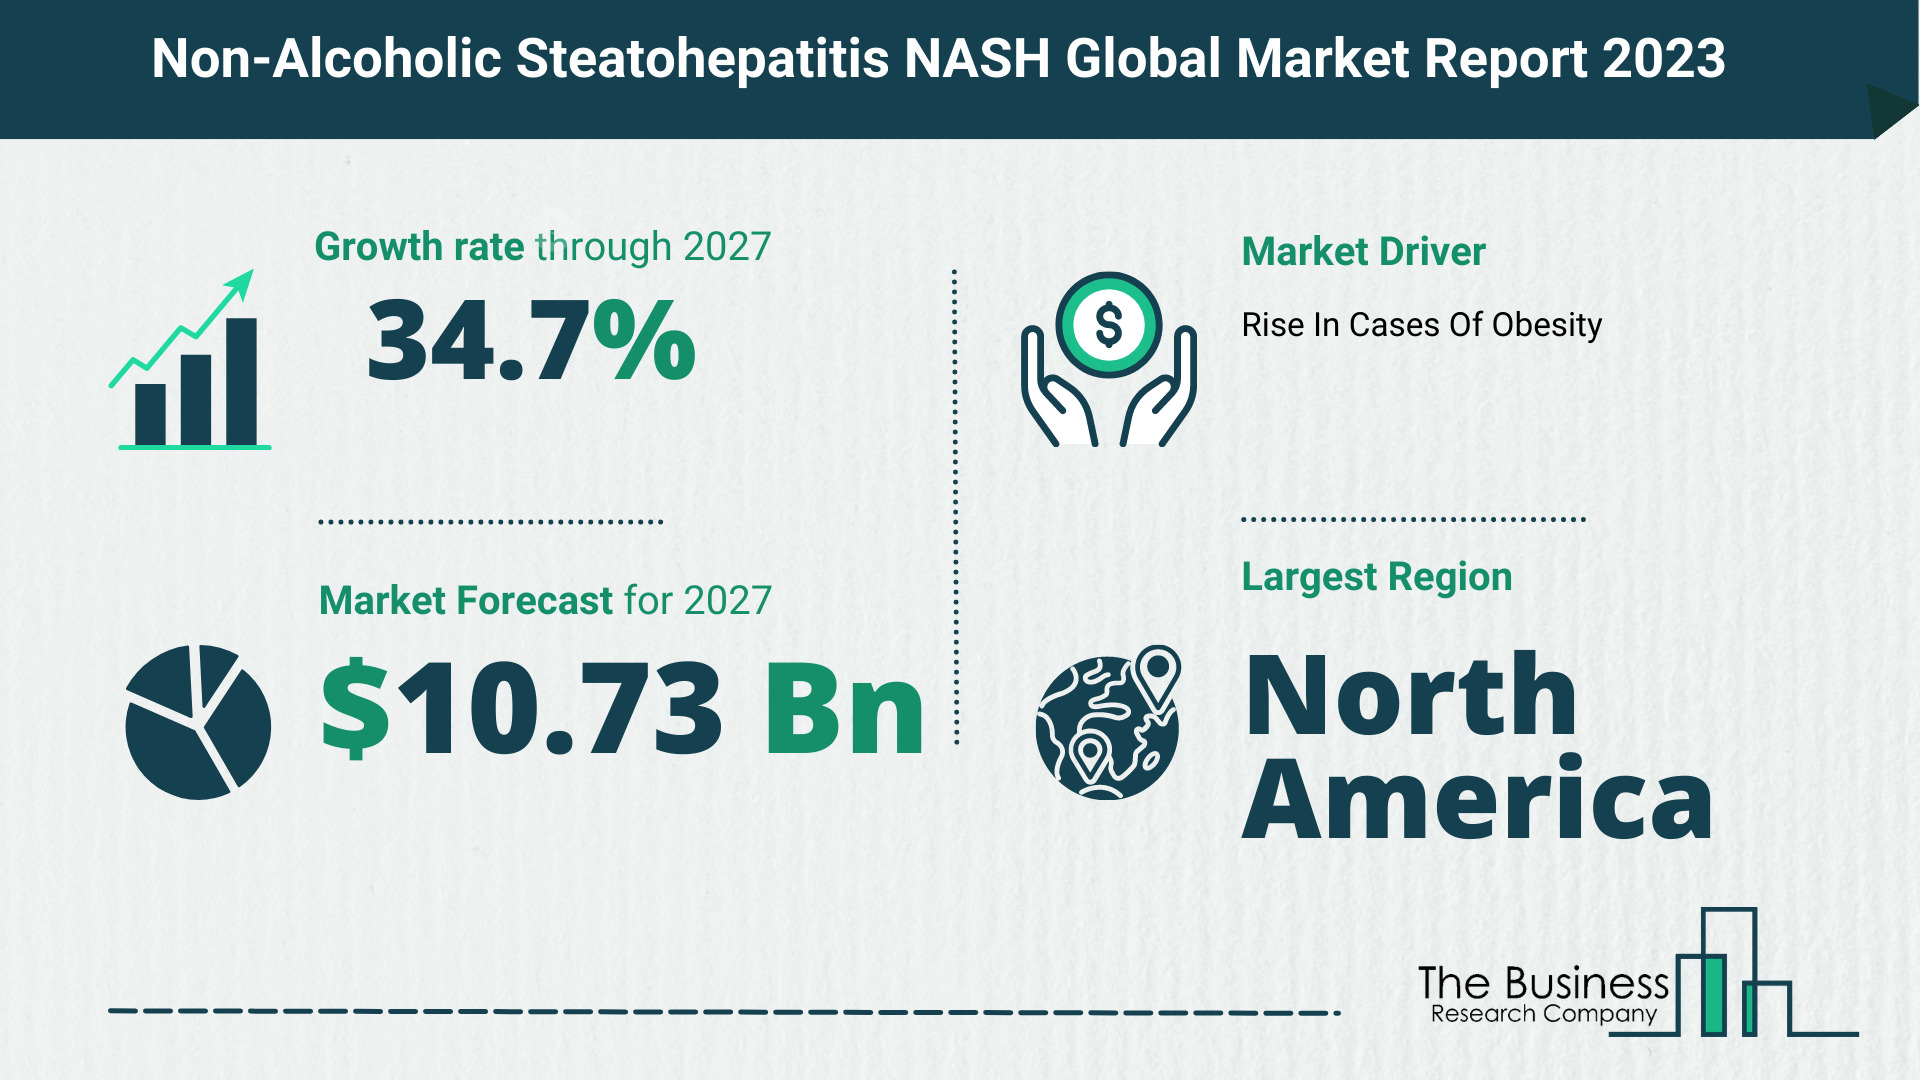 Global Non-Alcoholic Steatohepatitis NASH Market